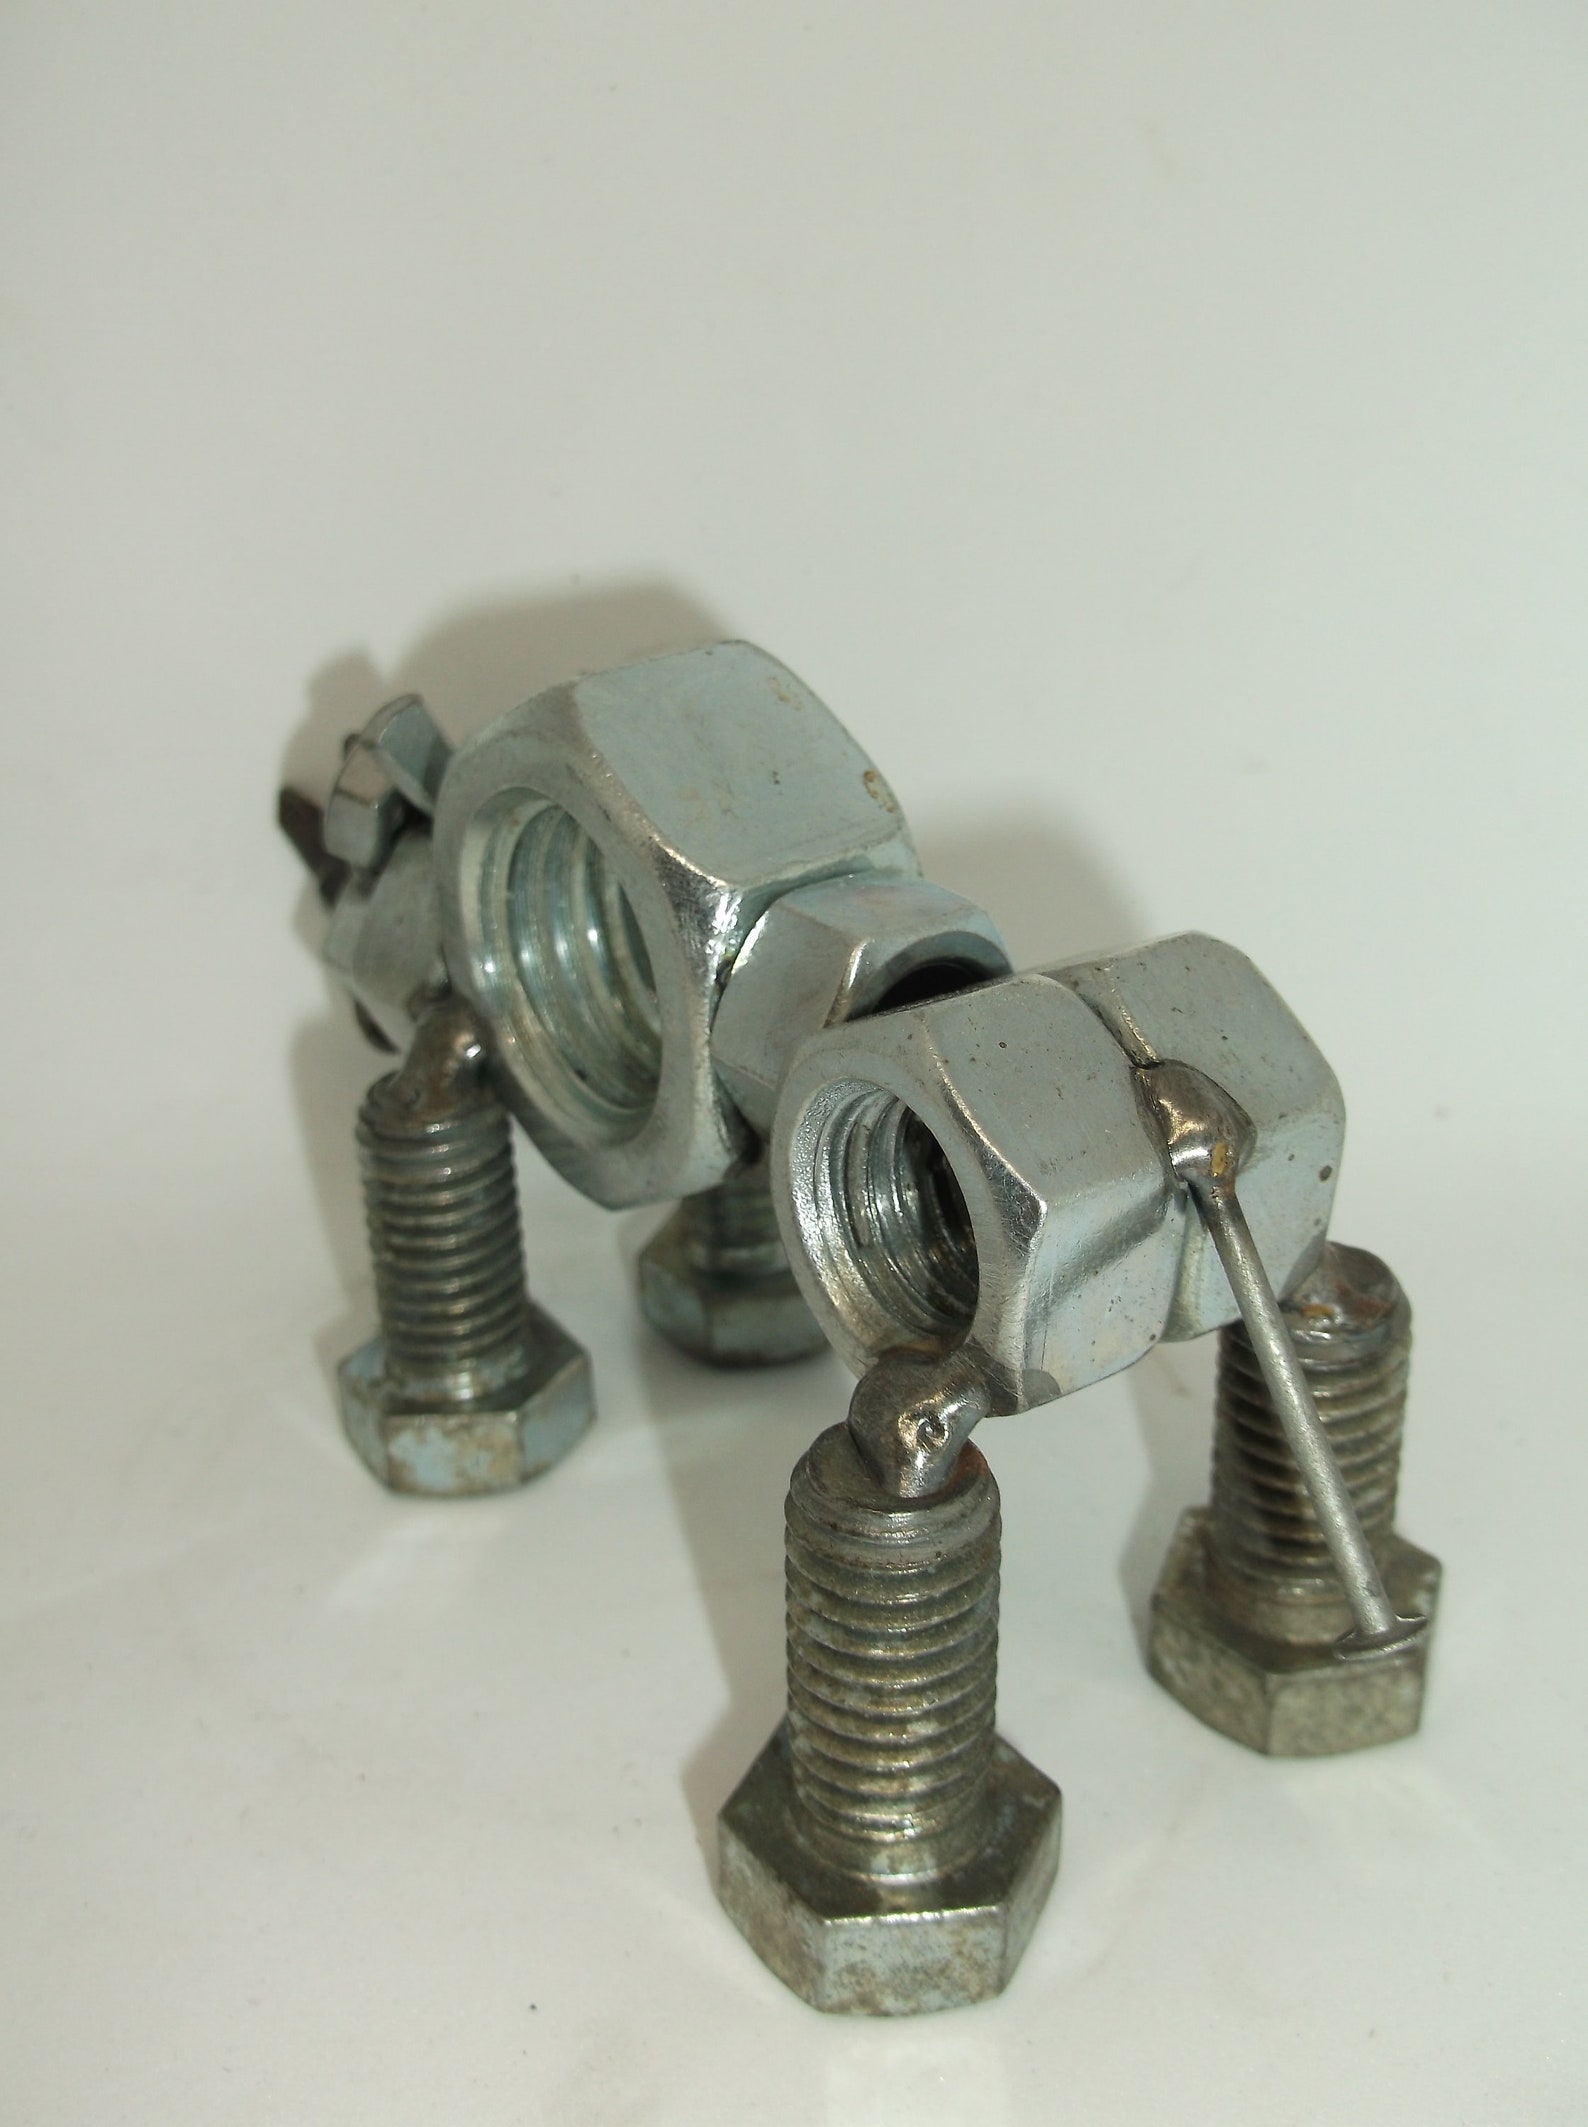 Rhino Metal Rhino Sculpture Animals Miniature up Cycled | Etsy